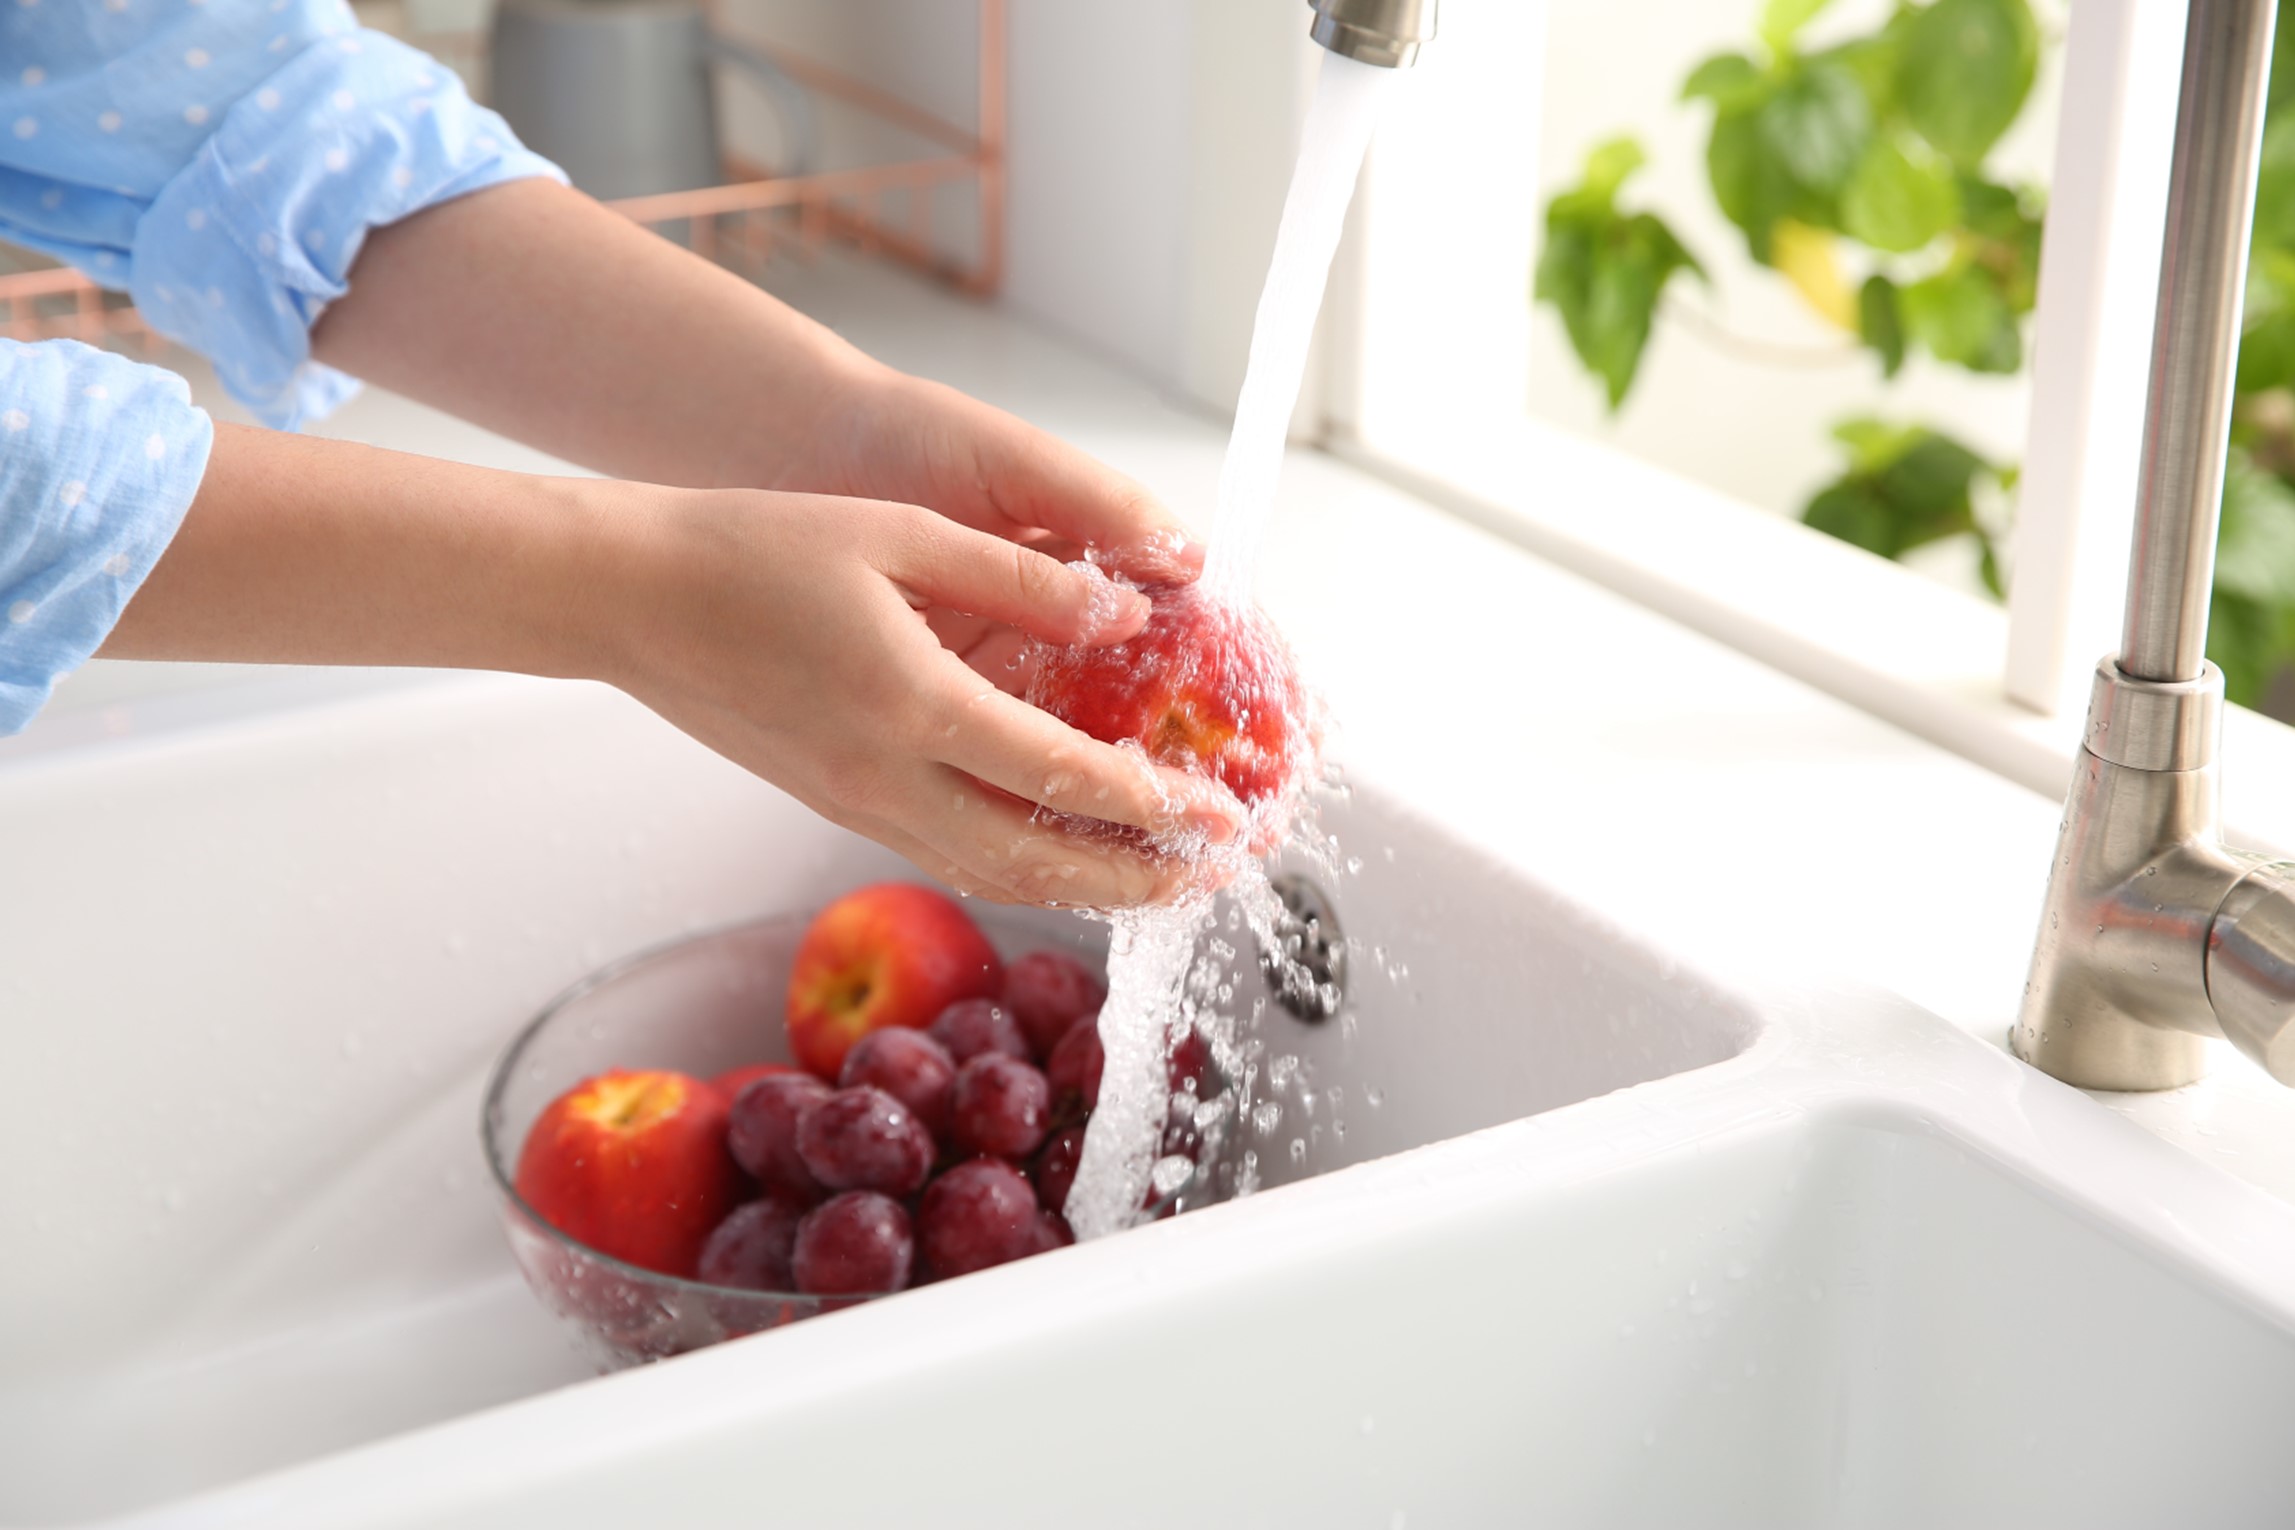 Fit Organic: Fruit & Vegetable Wash Spray, 12 Oz